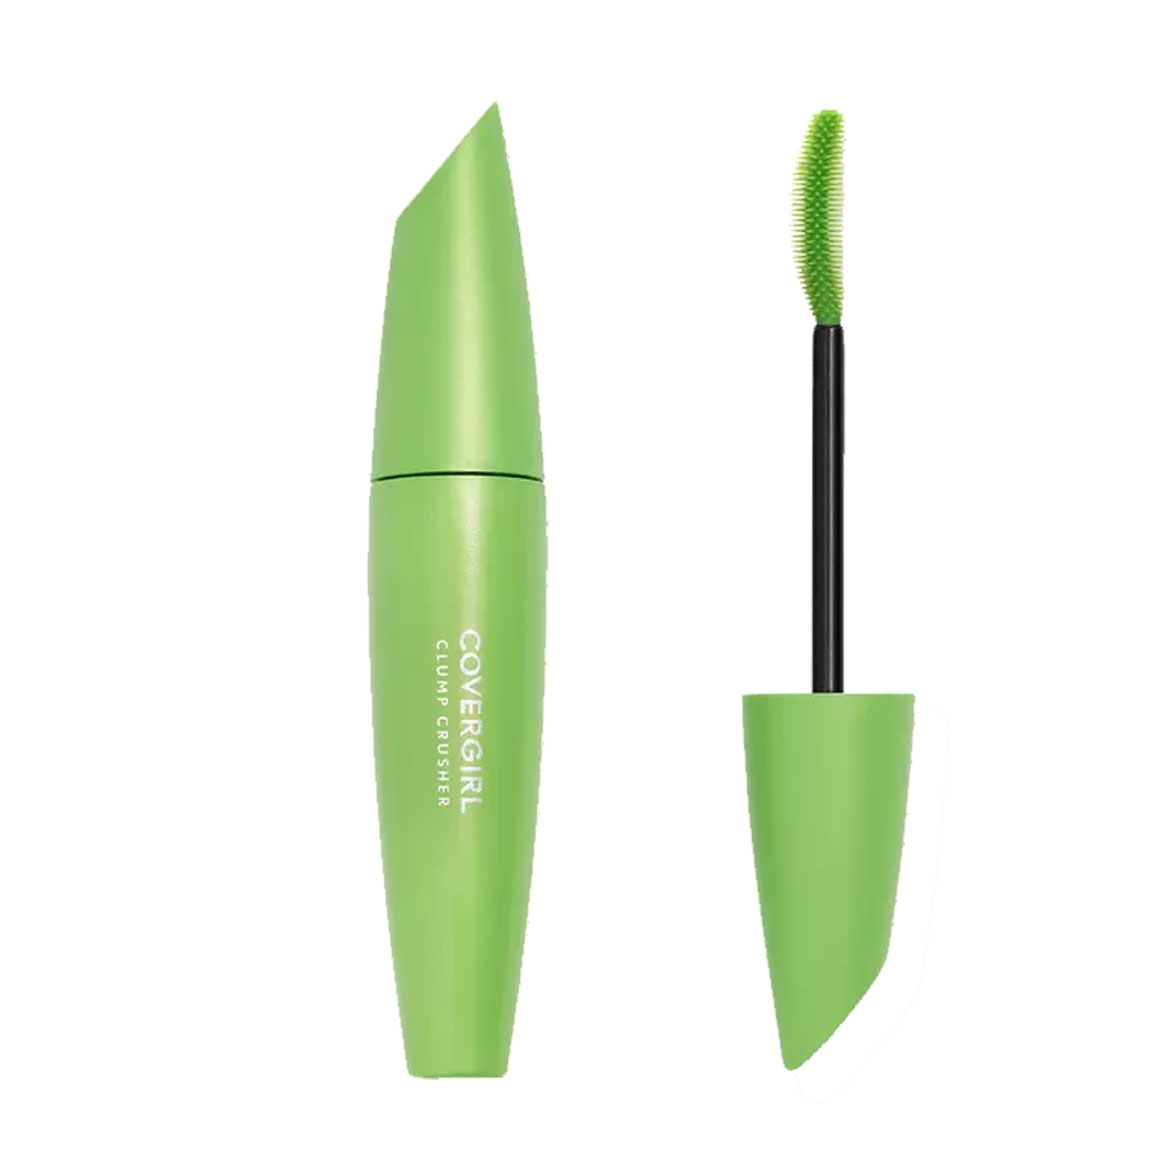 CoverGirl Clump Crusher Waterproof Mascara in a green packet